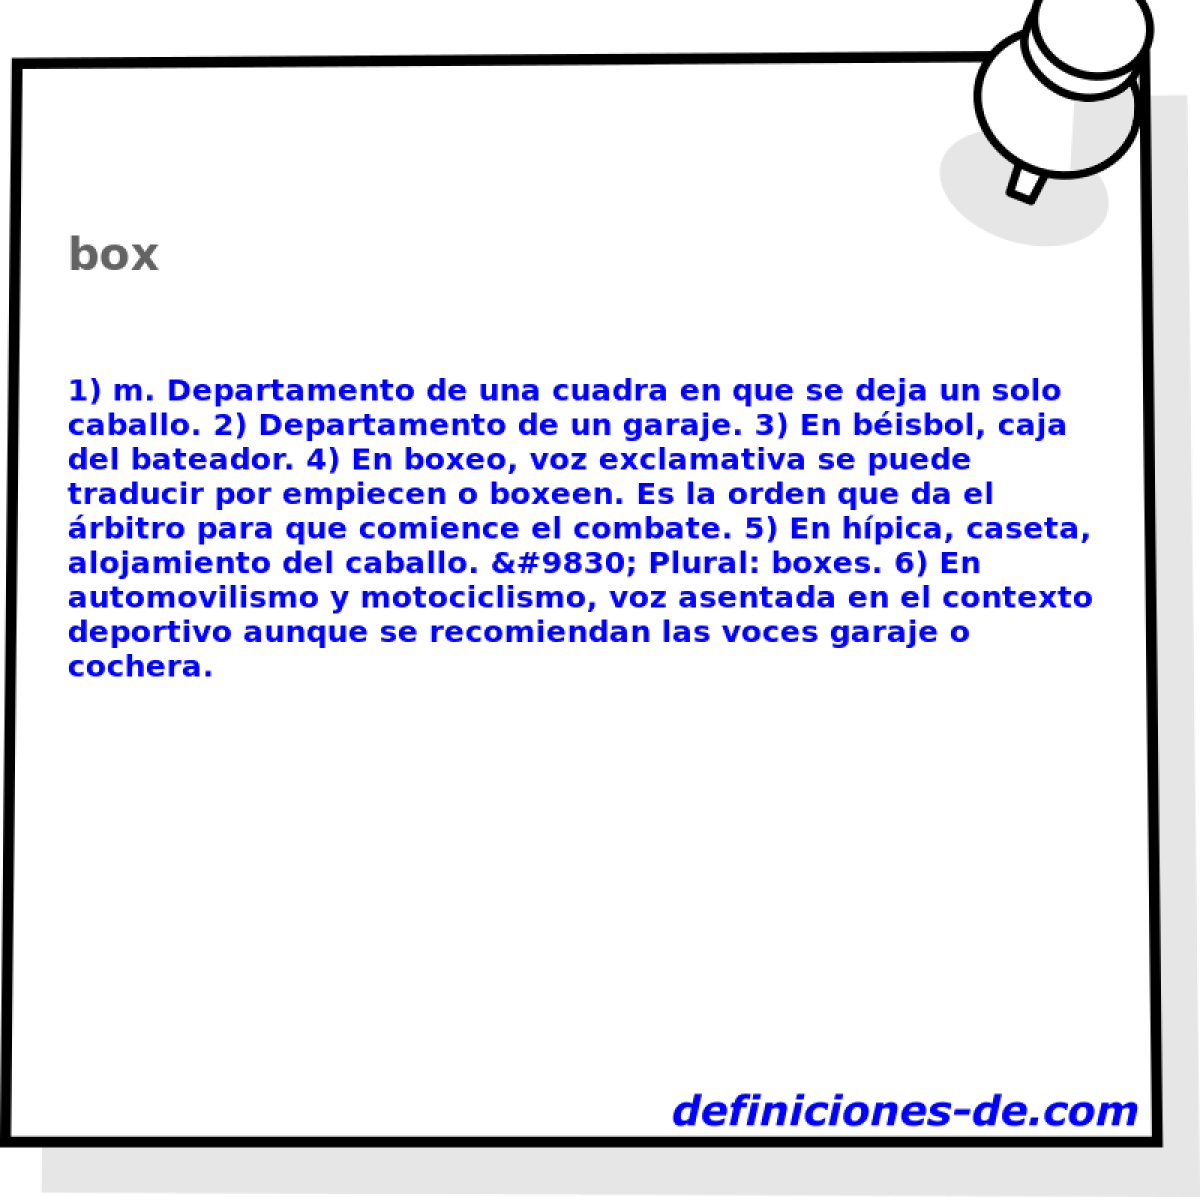 box 